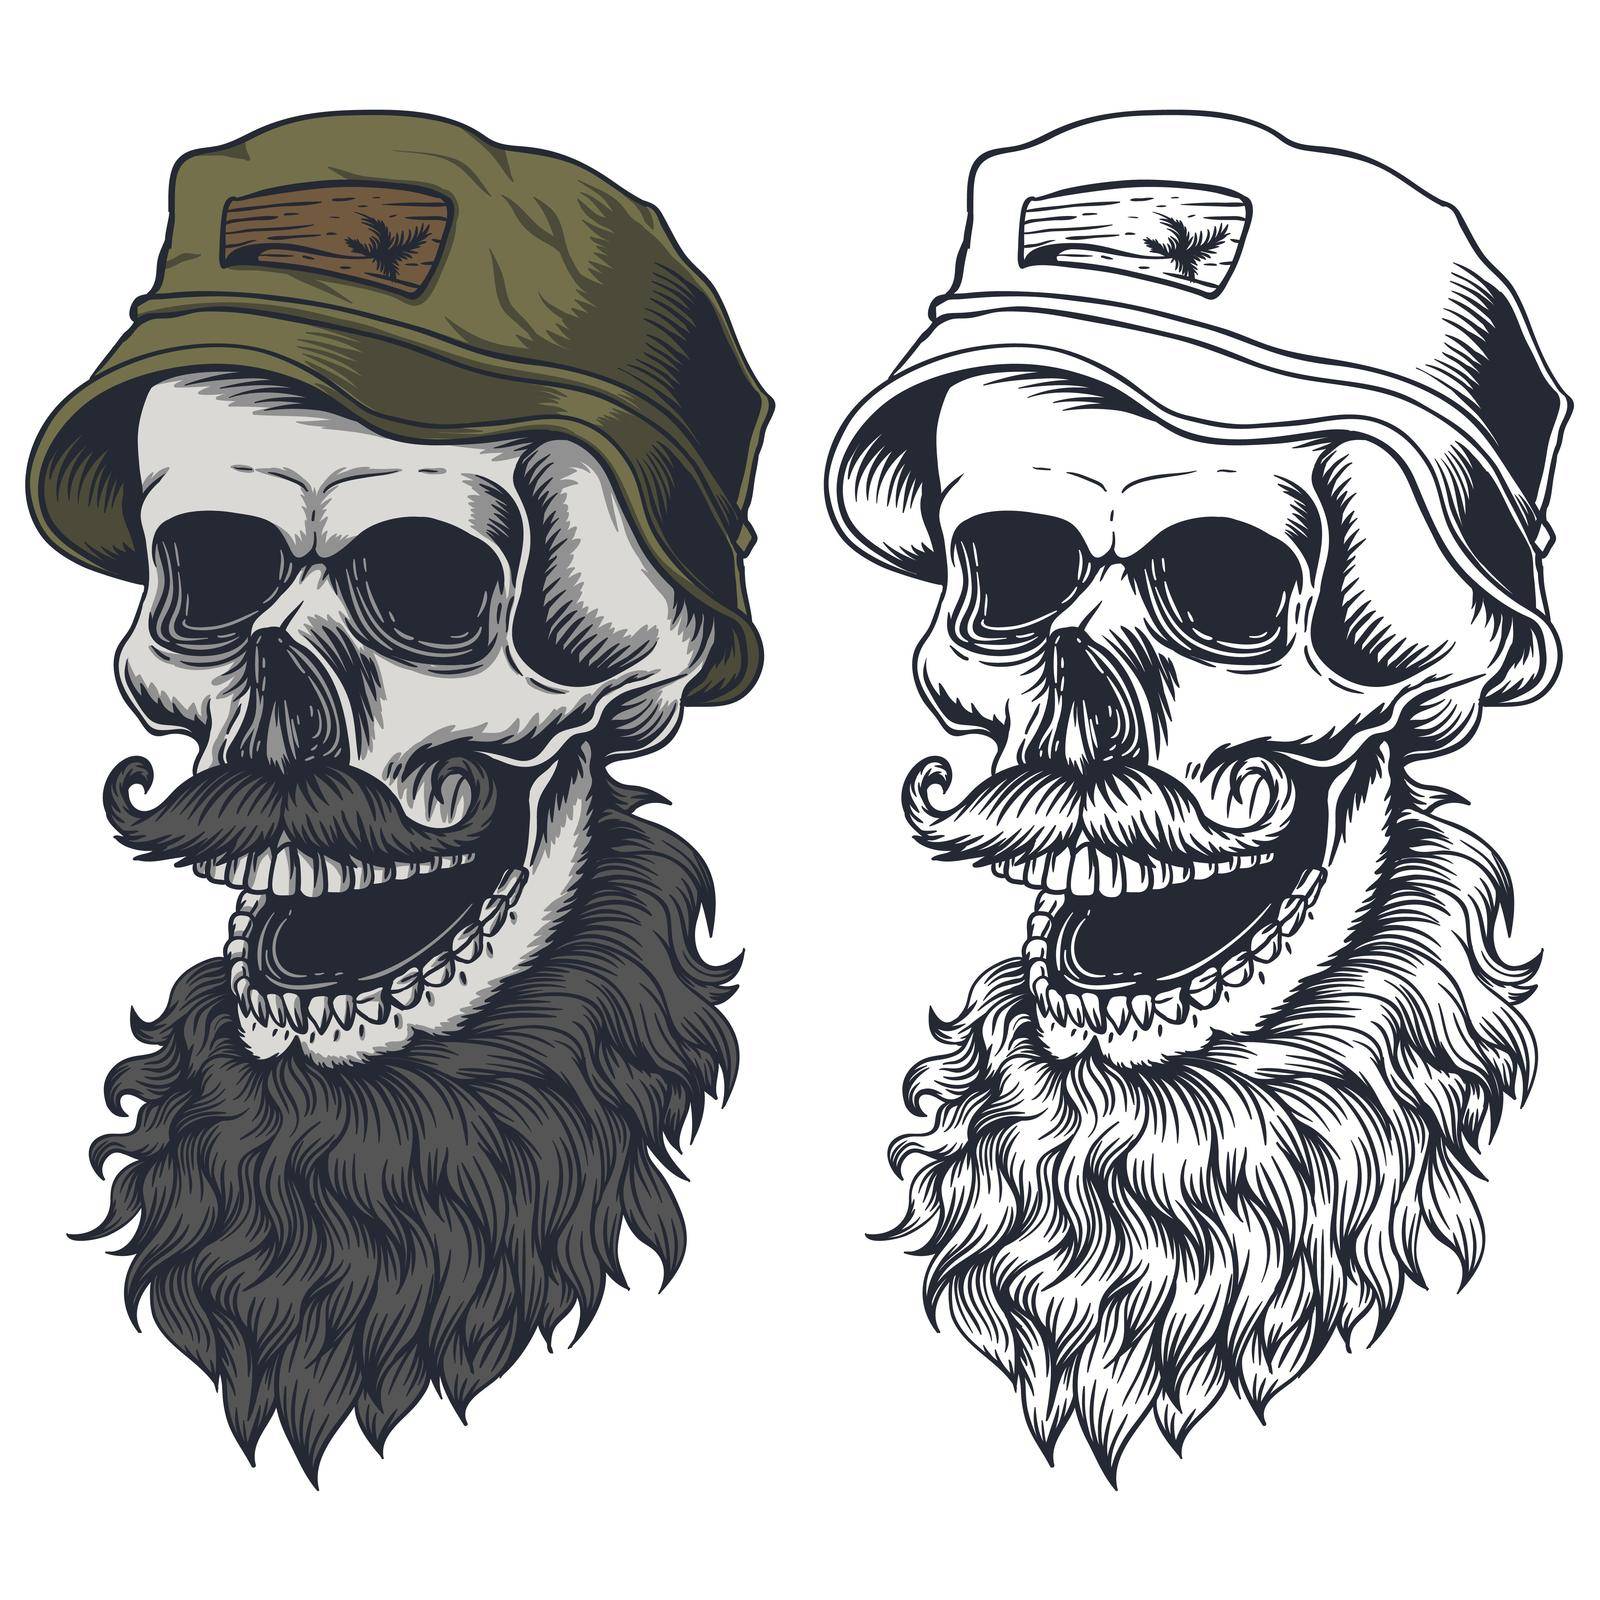 Skull beard mustache wear hat vector illustration for your company or brand